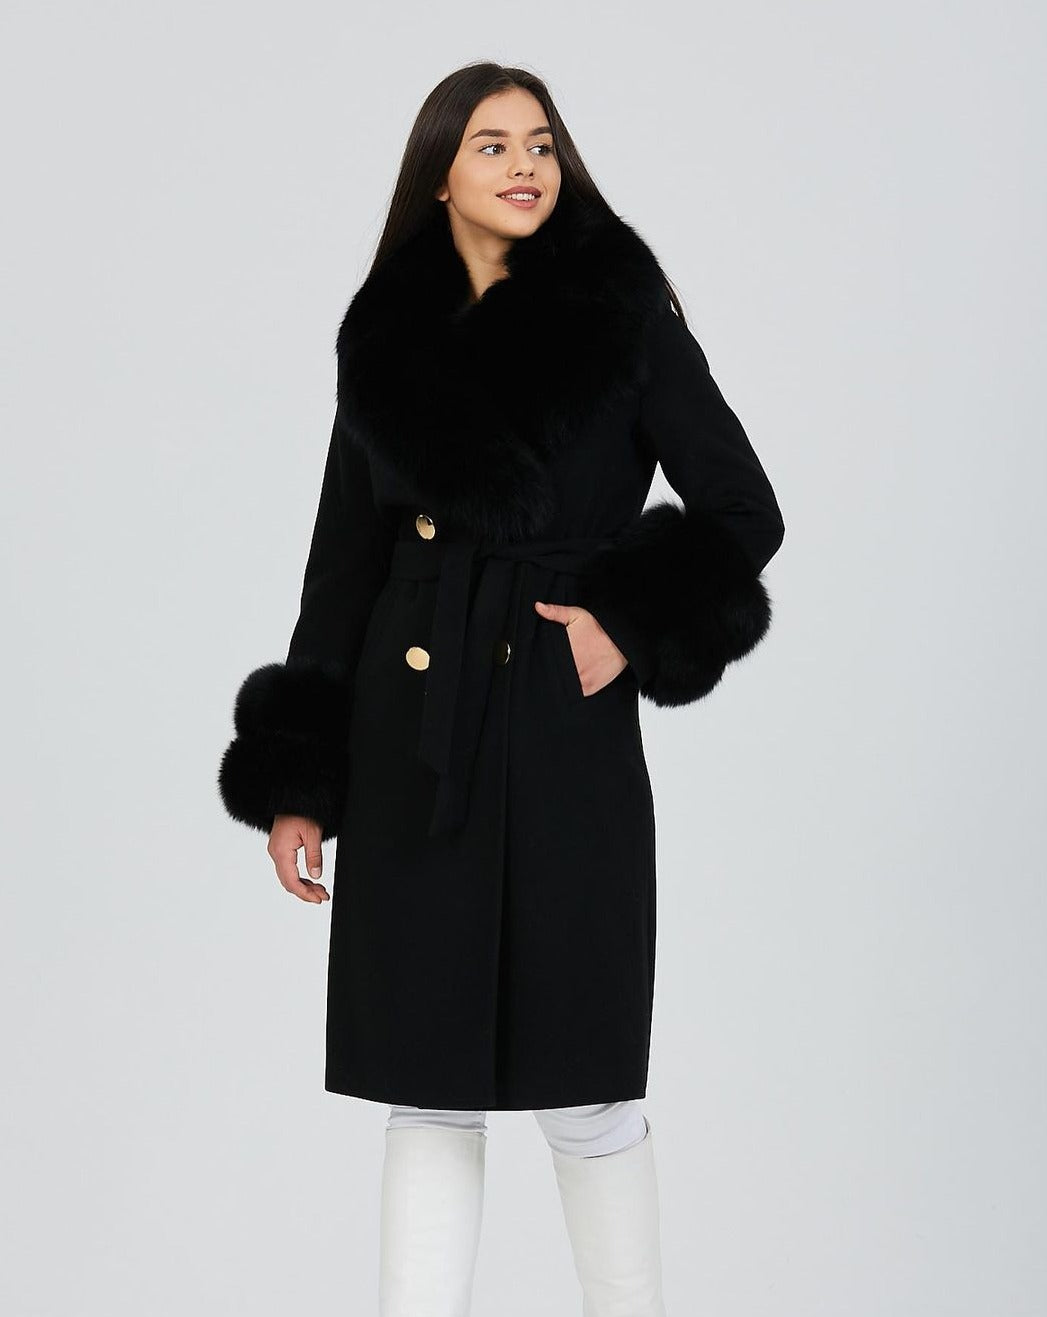 Elegant GLORIA BLACK Coat with Luxurious Fox Fur Collar and Cuffs